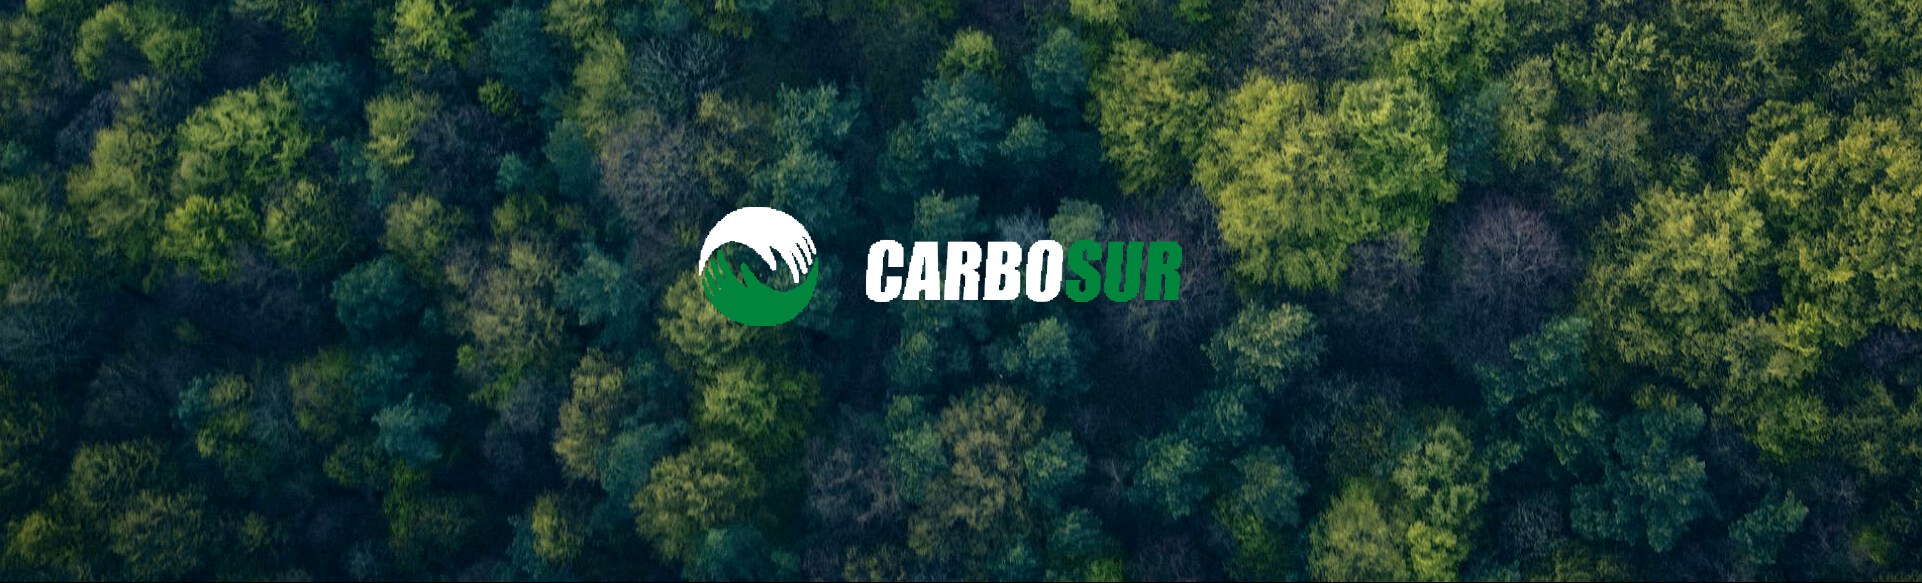 carbosur